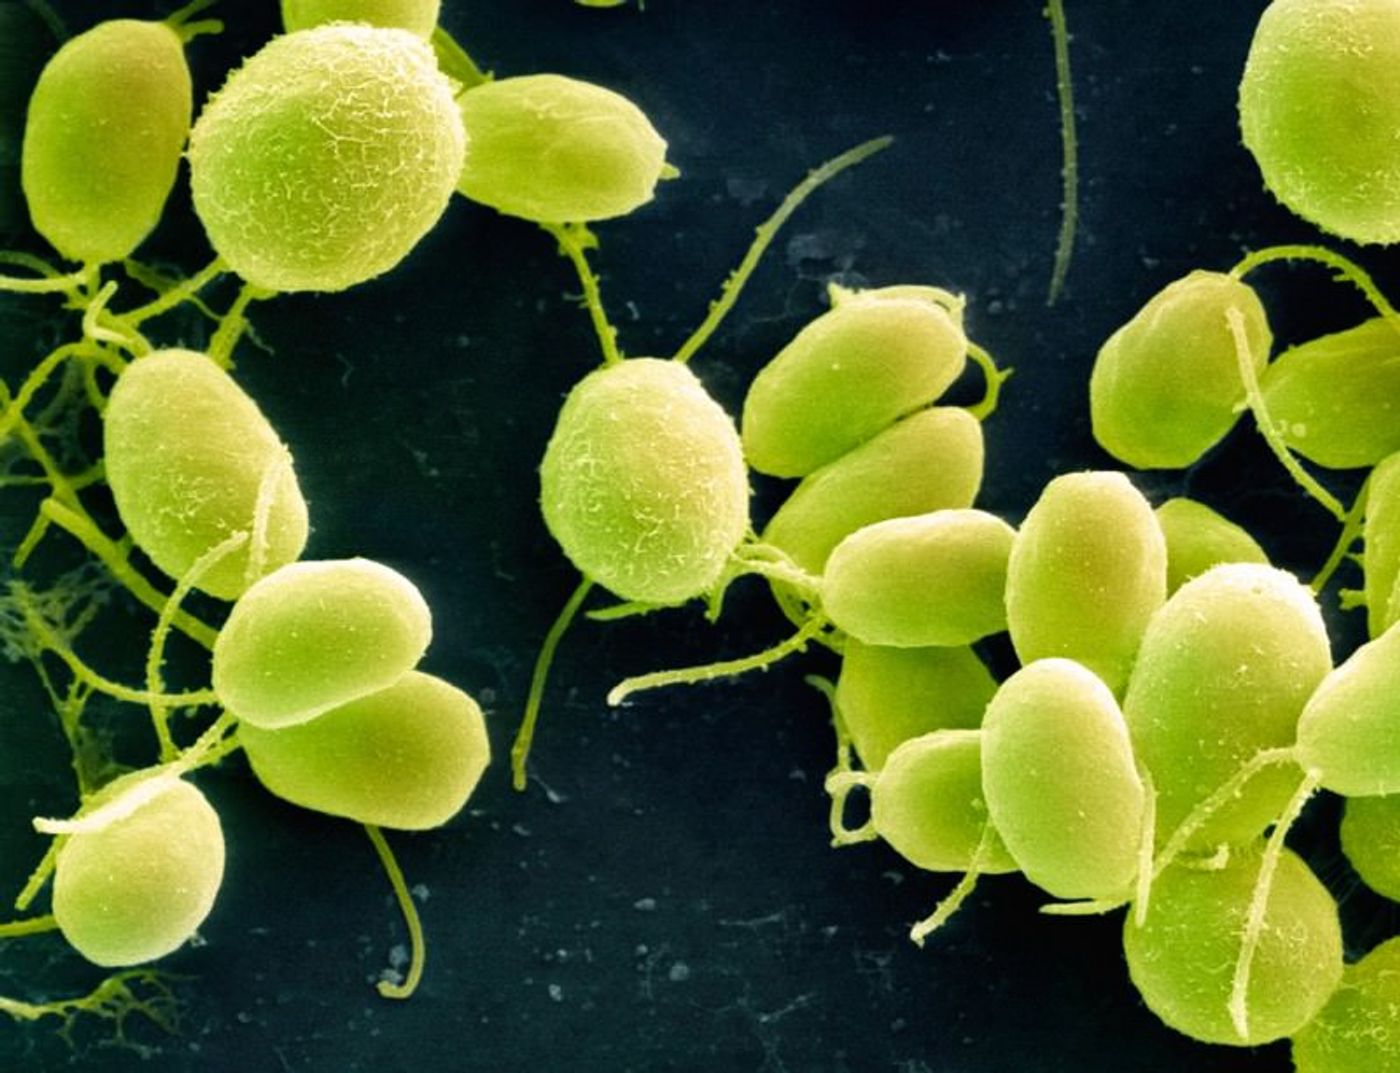 Chlamydomonas are single-celled green algae.